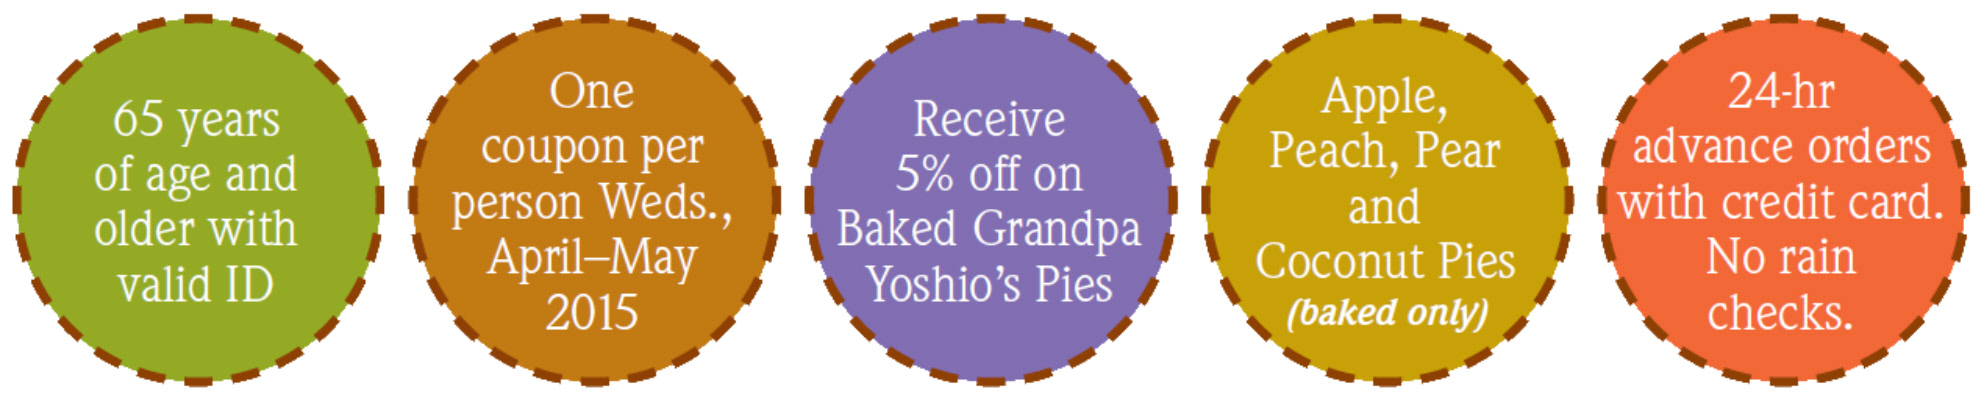 Generations Magazine -Hawaiian Pie Company Honors Great-Grandfather’s Baking Legacy - Image 06